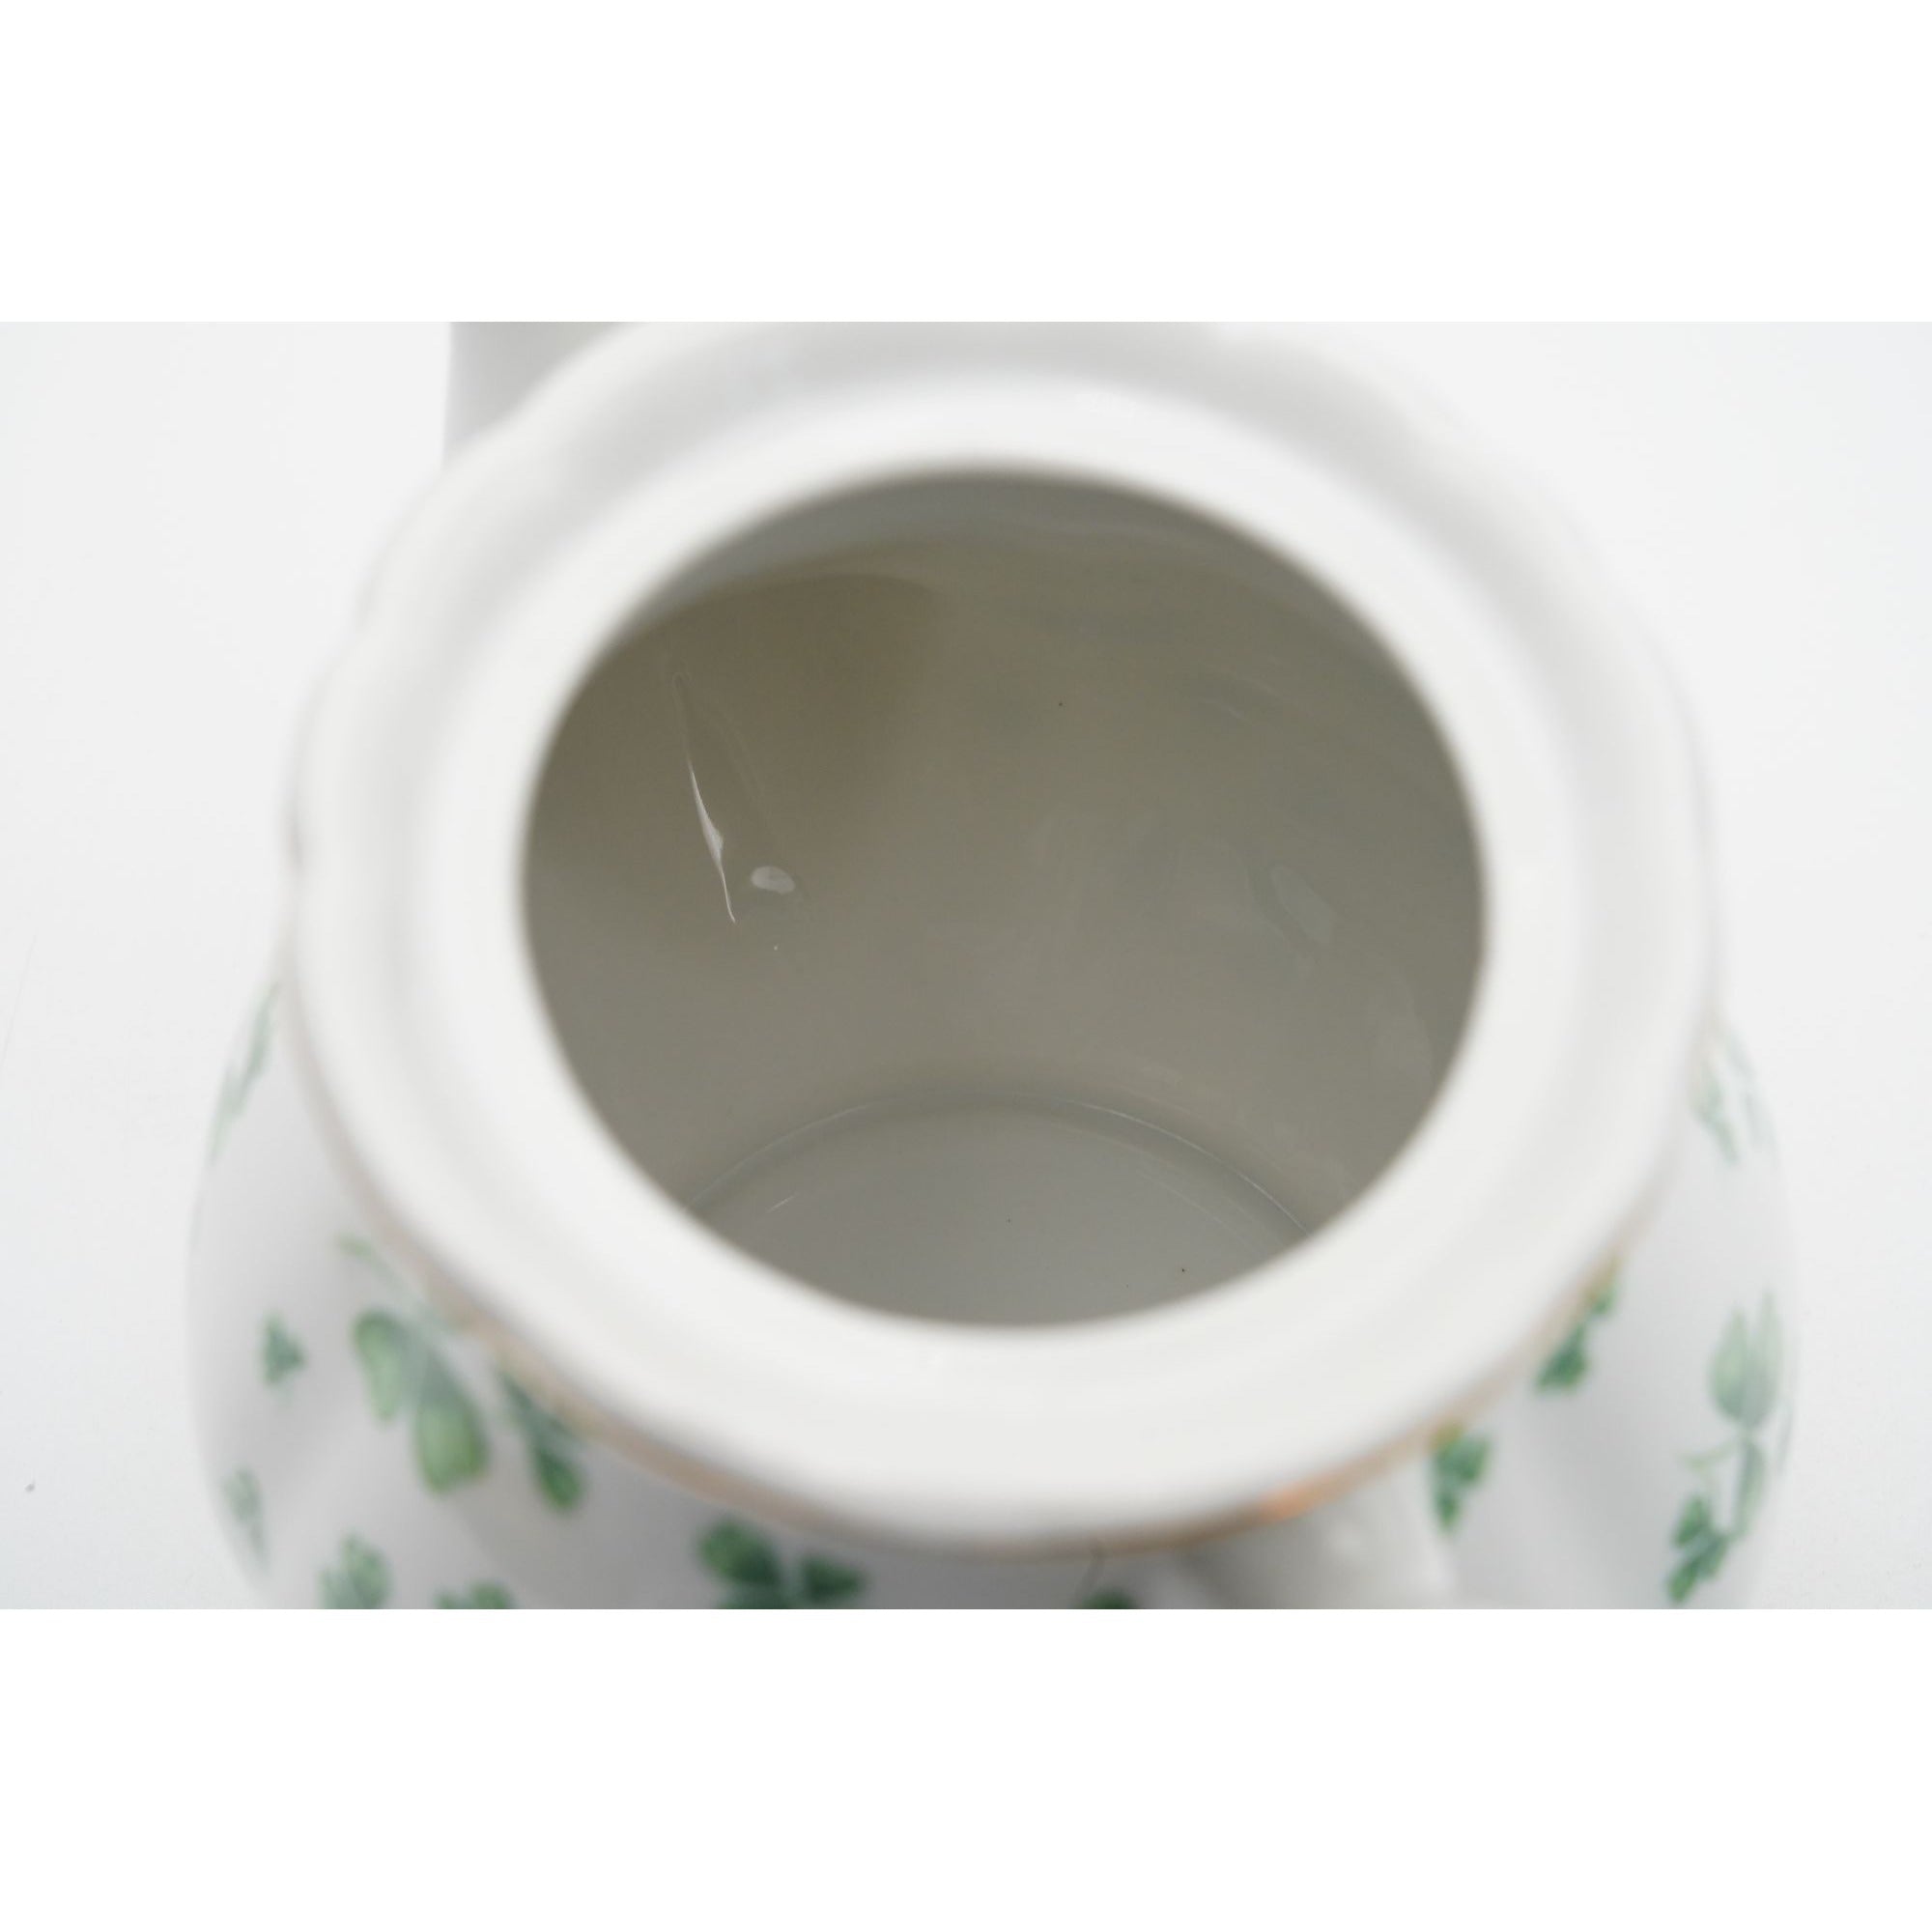 Lefton China Shamrock Teapot w/Lid, Gold Tone Accents #03080